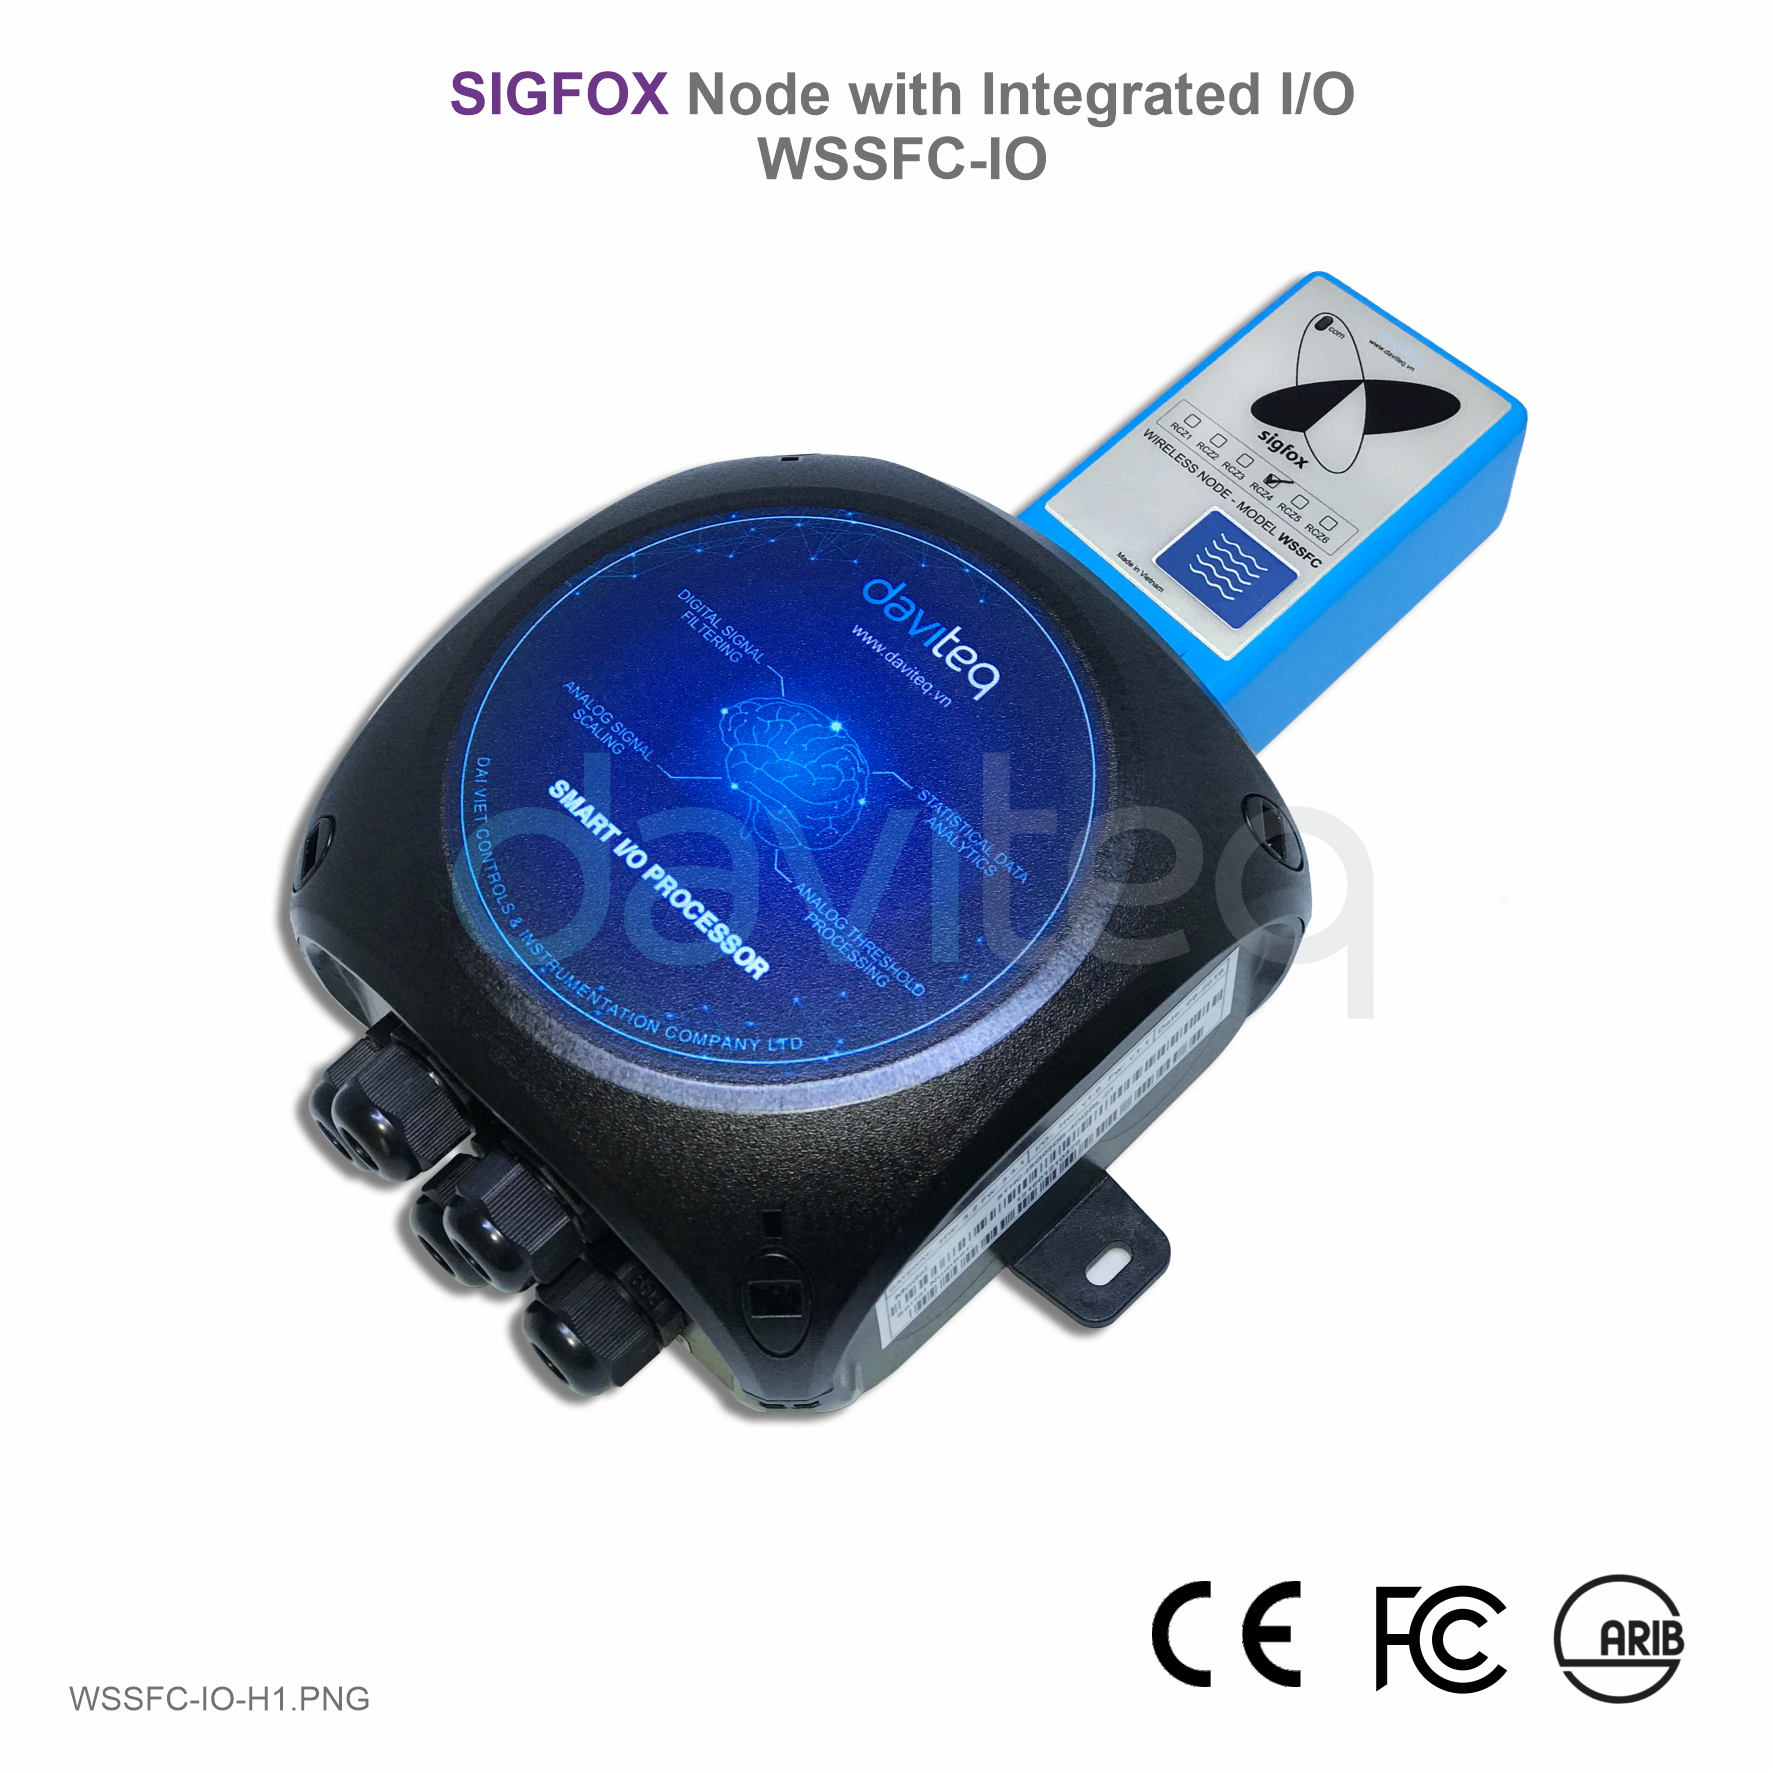 Sigfox Node with Integrated I/O